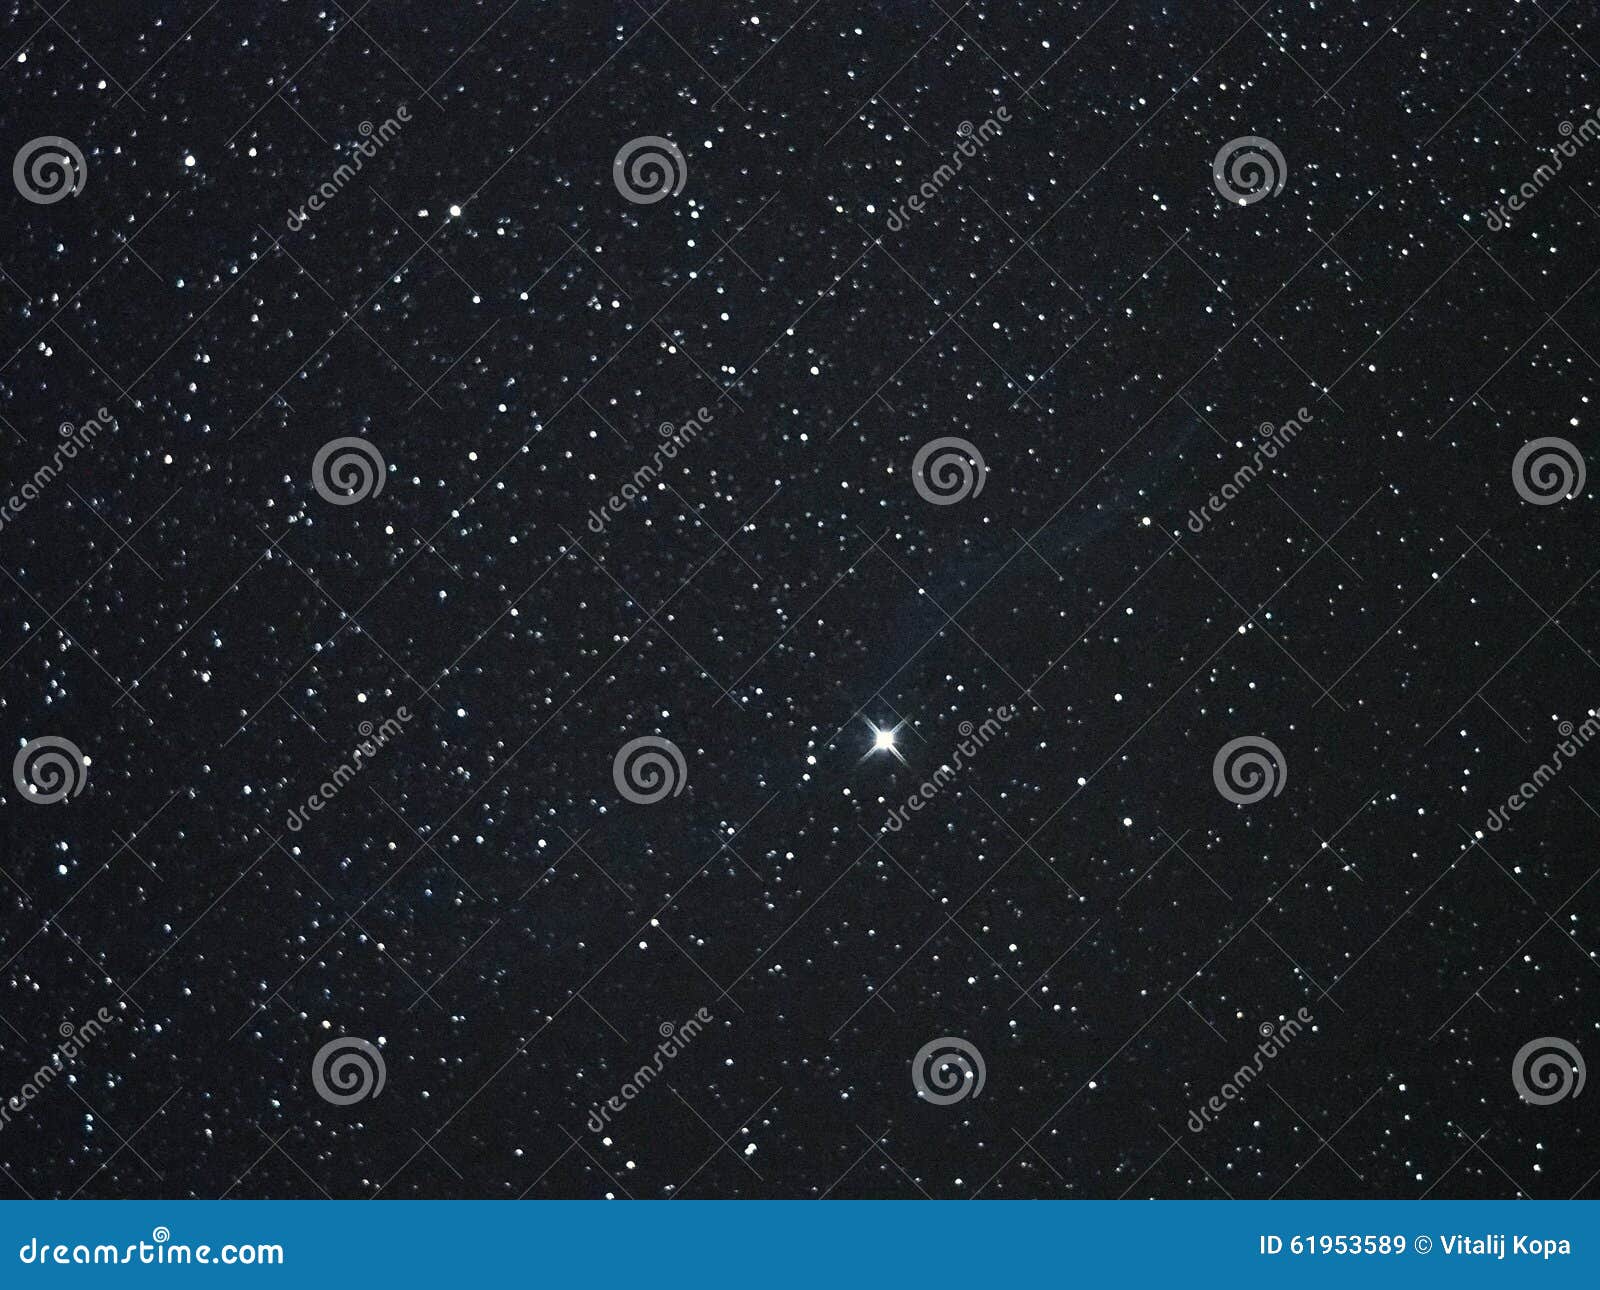 night sky stars, cygnus constellation star